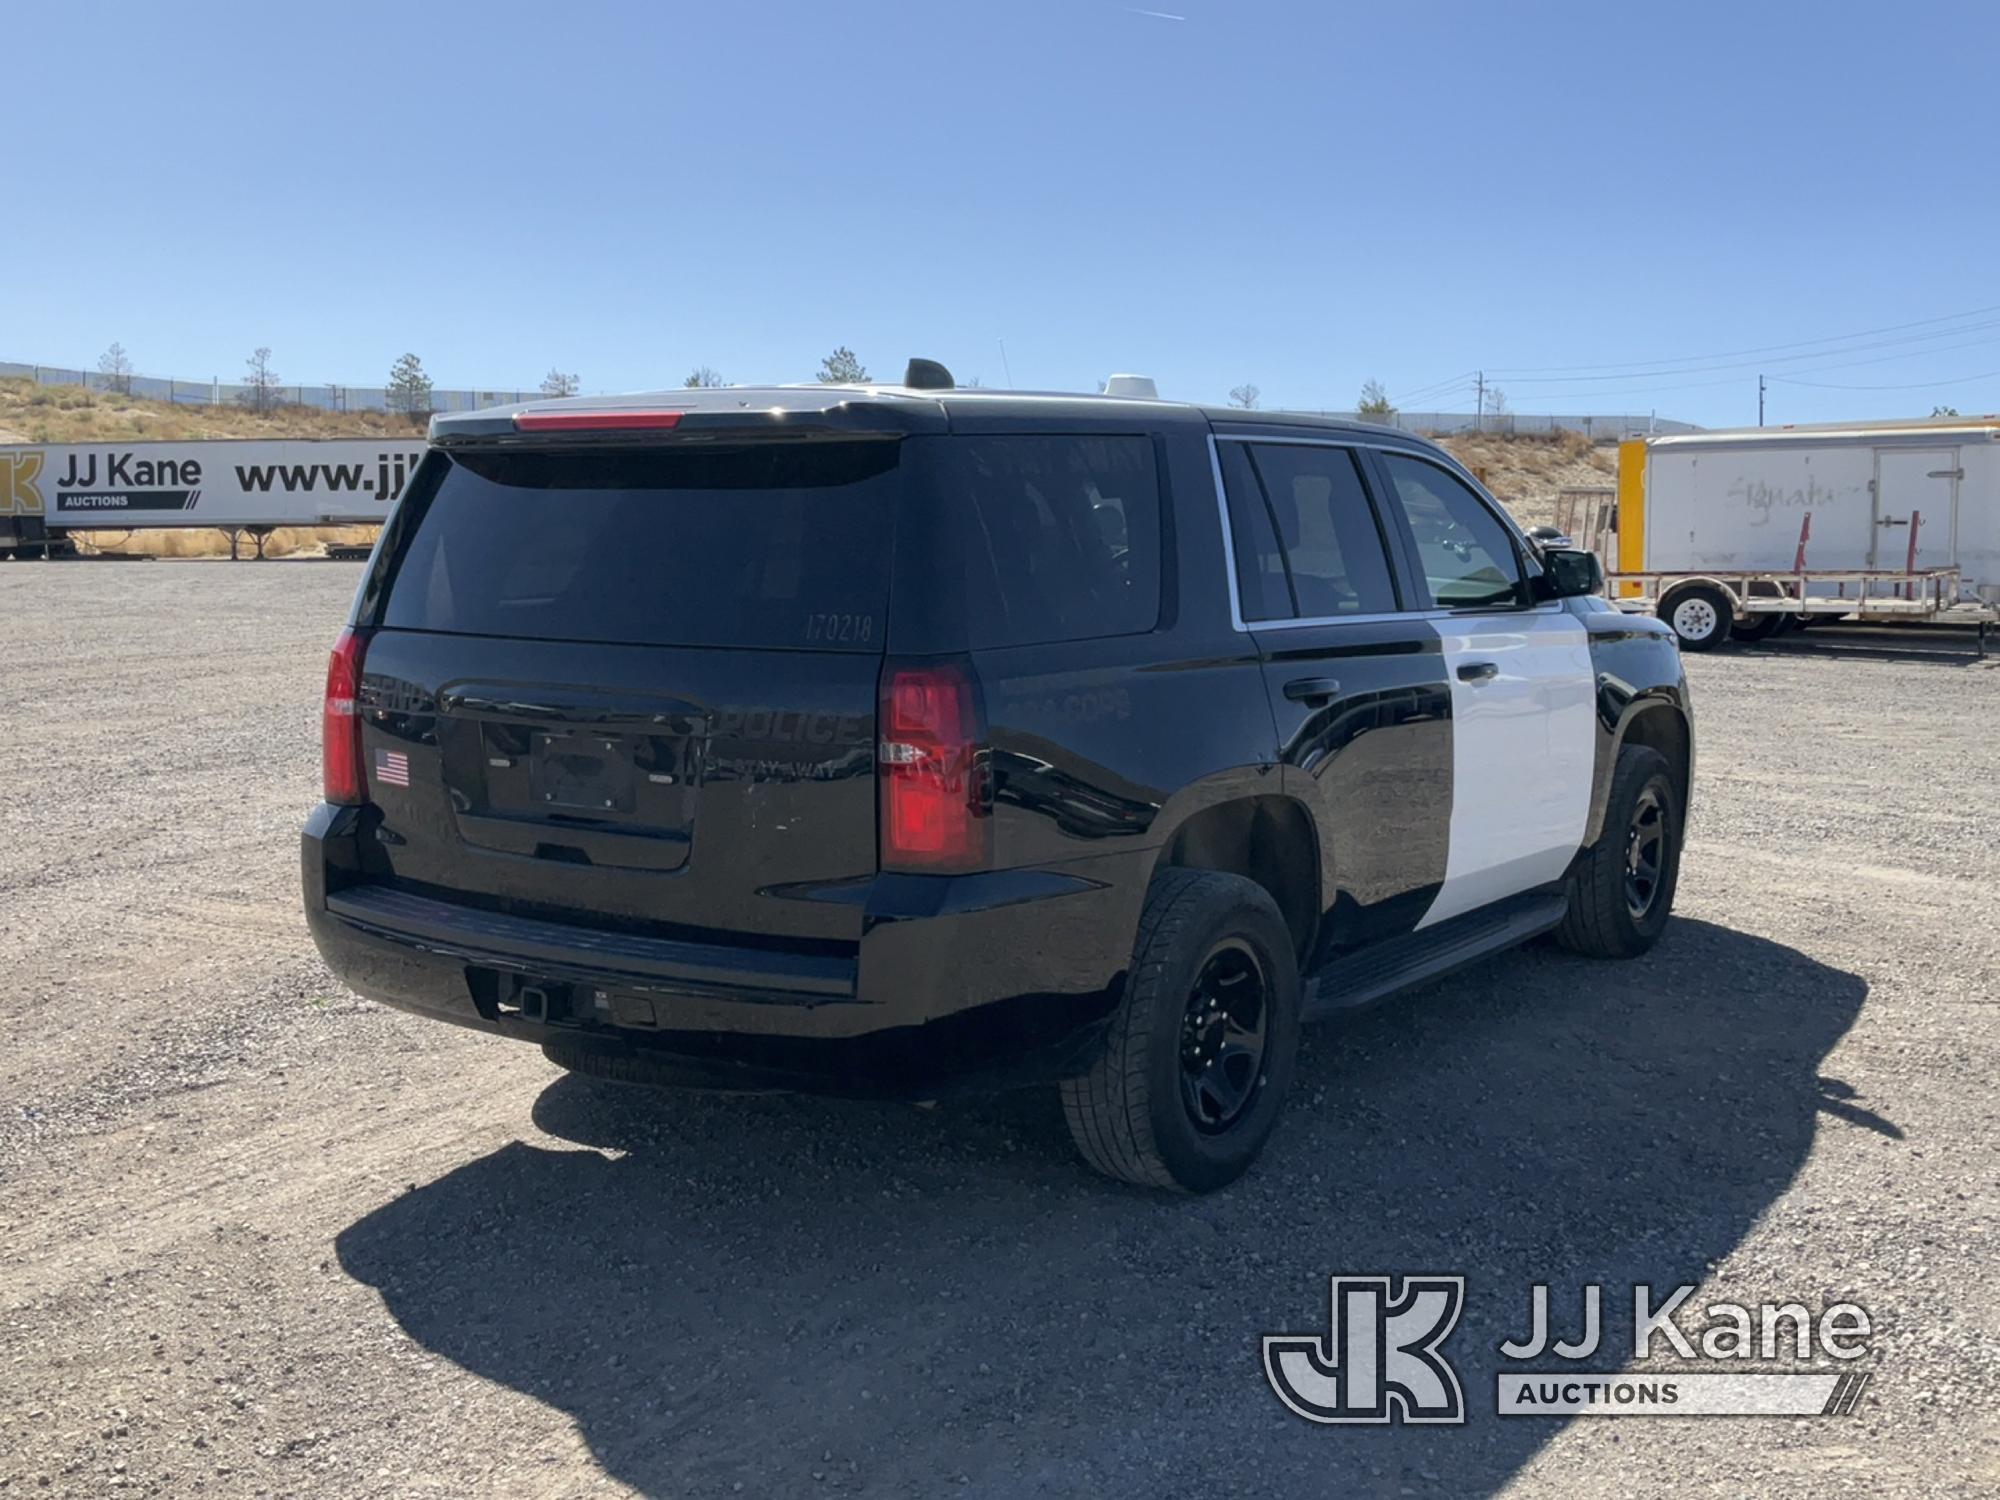 (McCarran, NV) 2017 Chevrolet Tahoe Police Package 4x4 4-Door Sport Utility Vehicle Runs & Moves